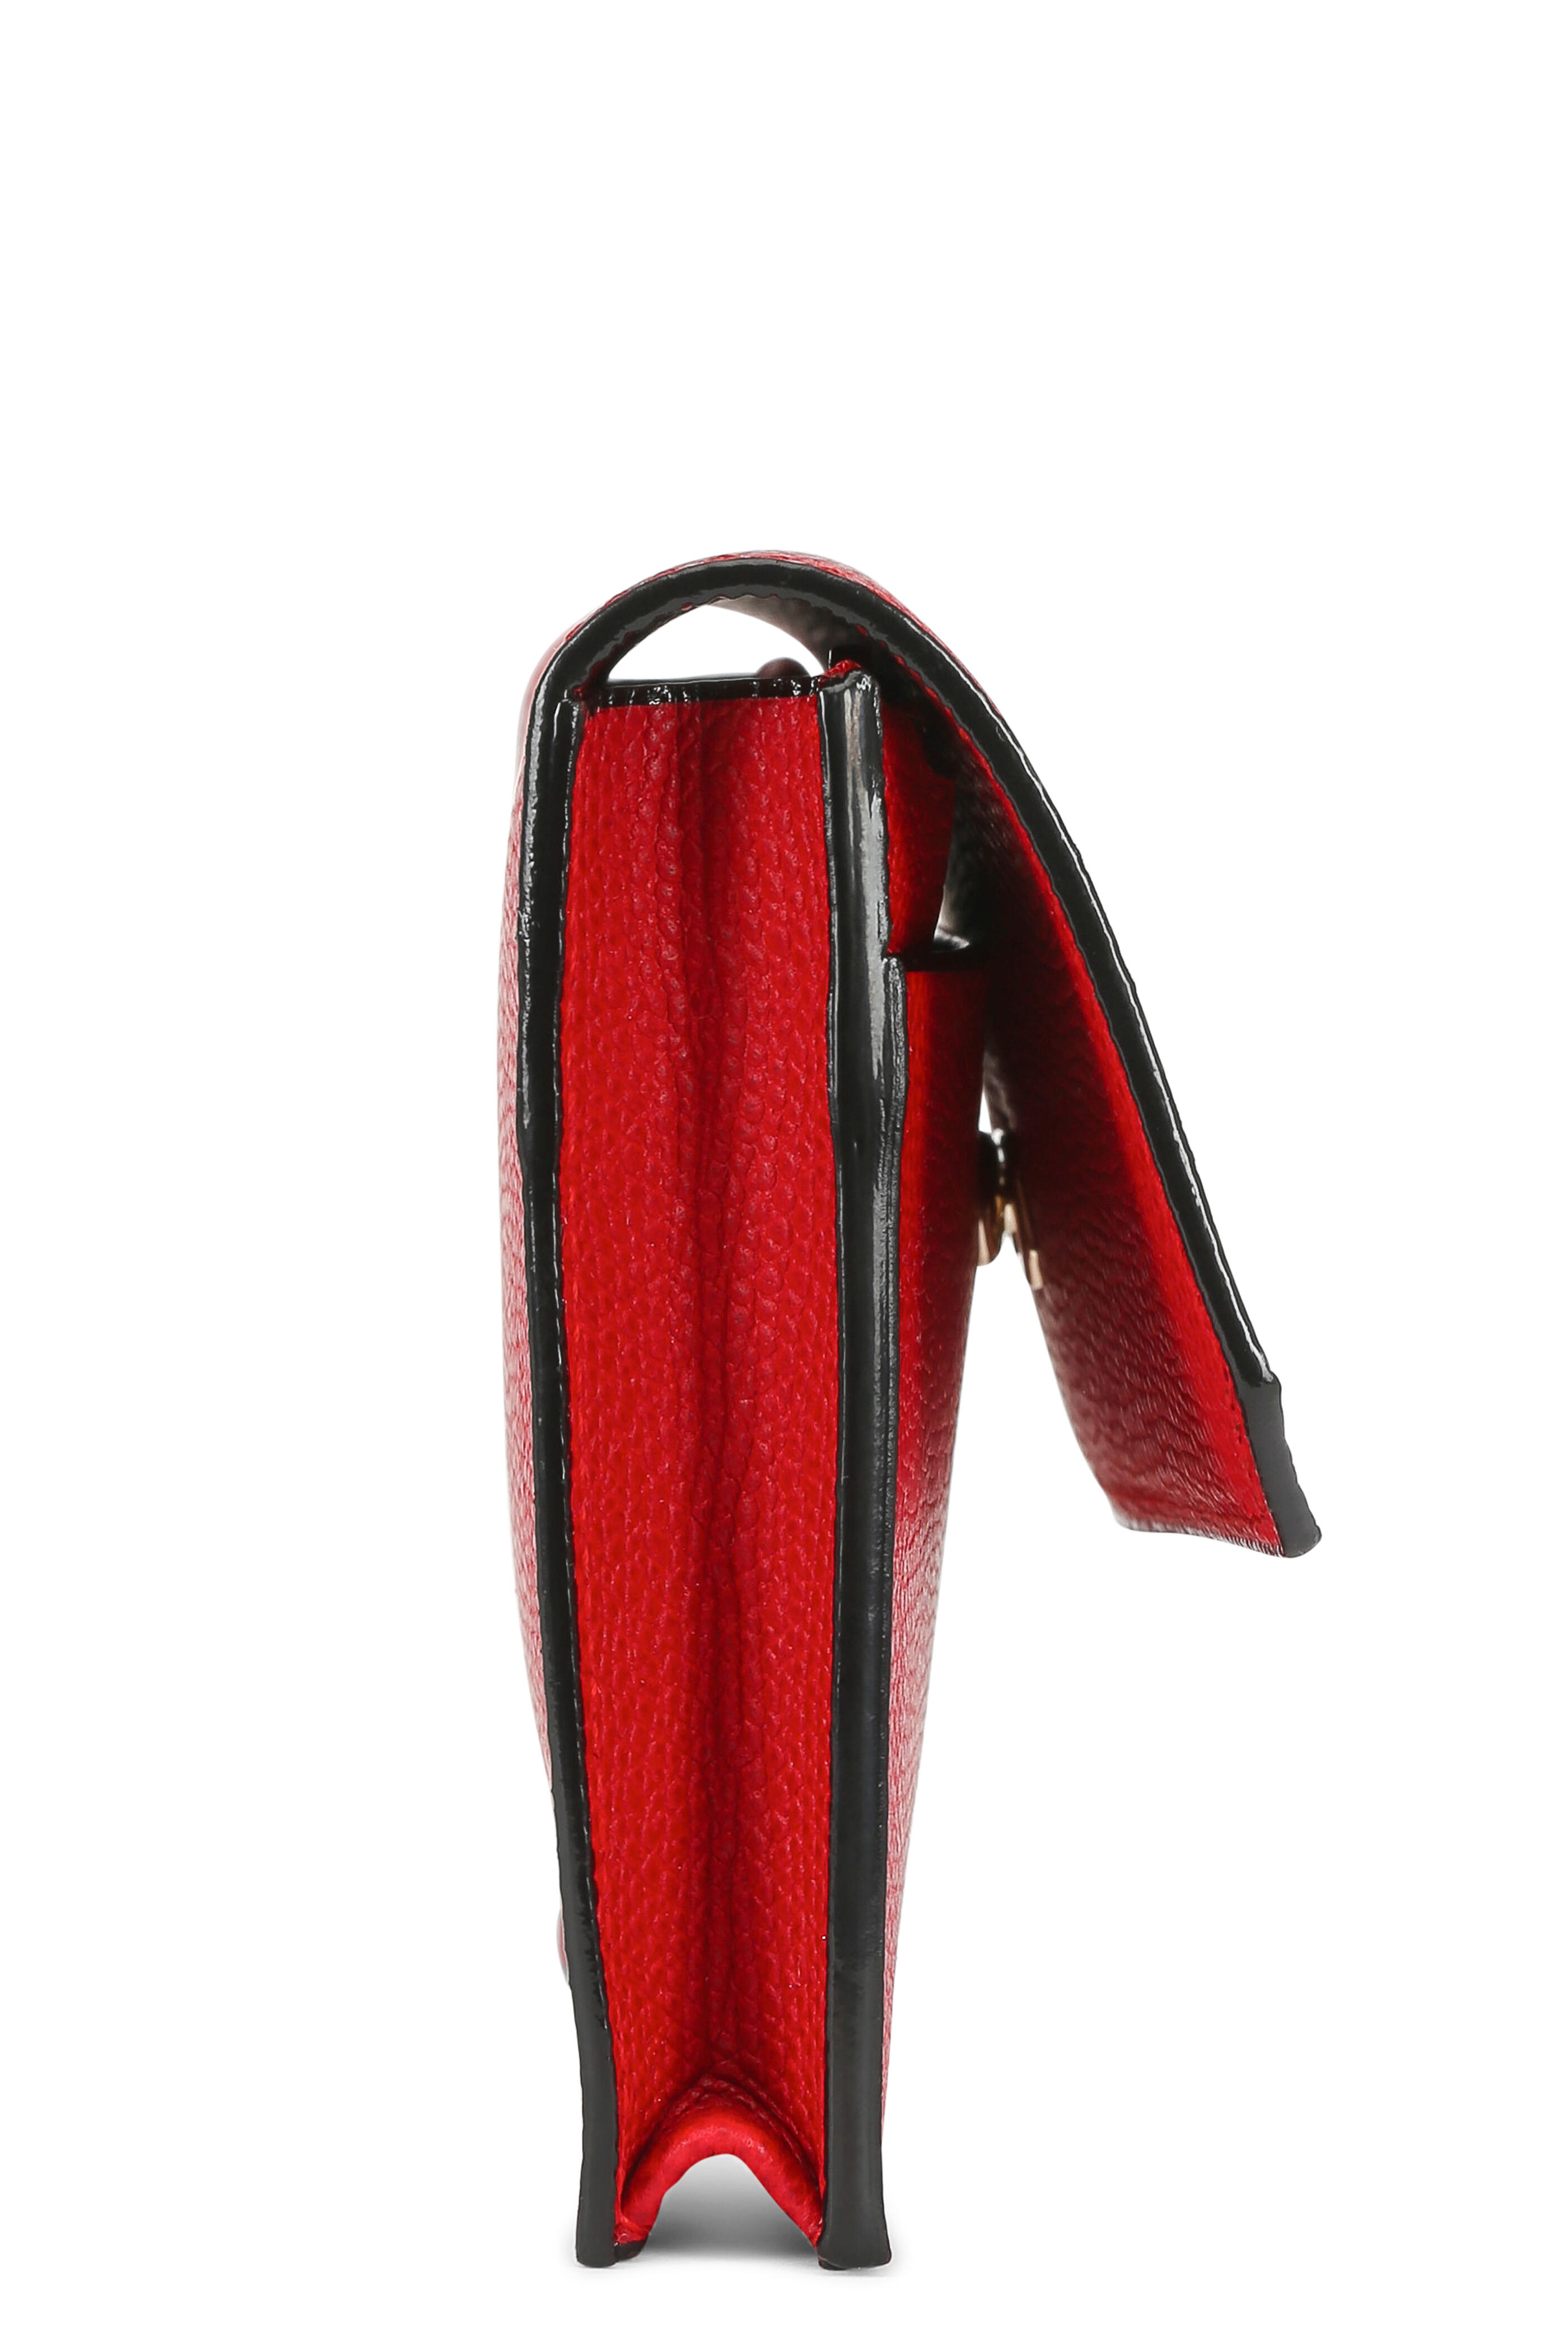 Valentino Red Saffiano Leather Rockstud Twist Lock Zip Wallet